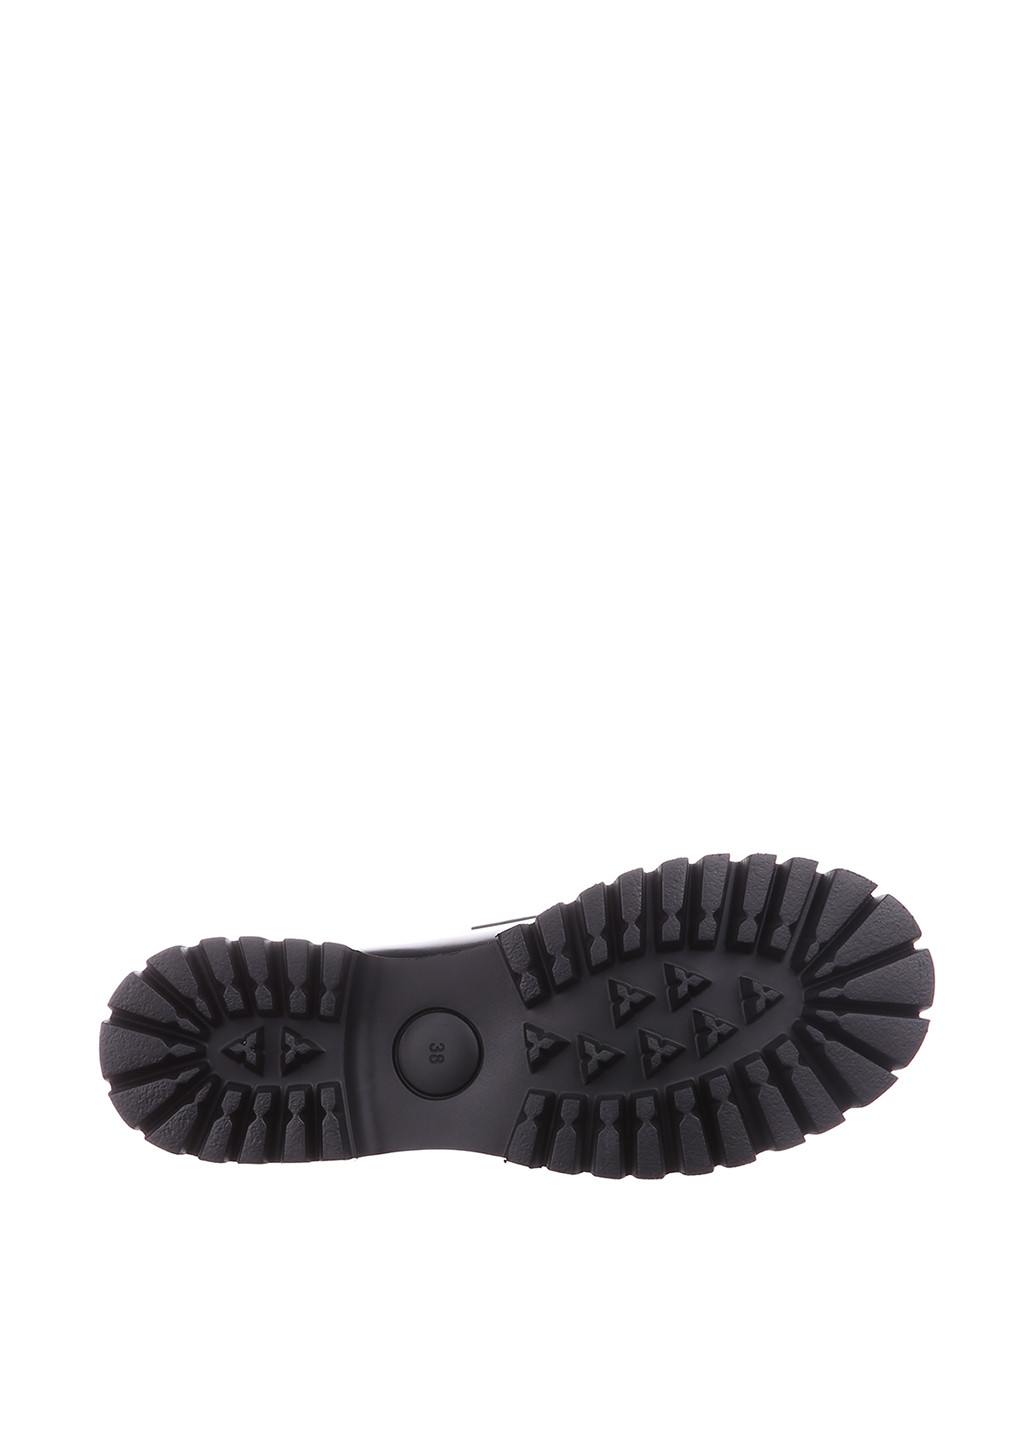 Туфли Anemone на среднем каблуке на тракторной подошве, лаковые